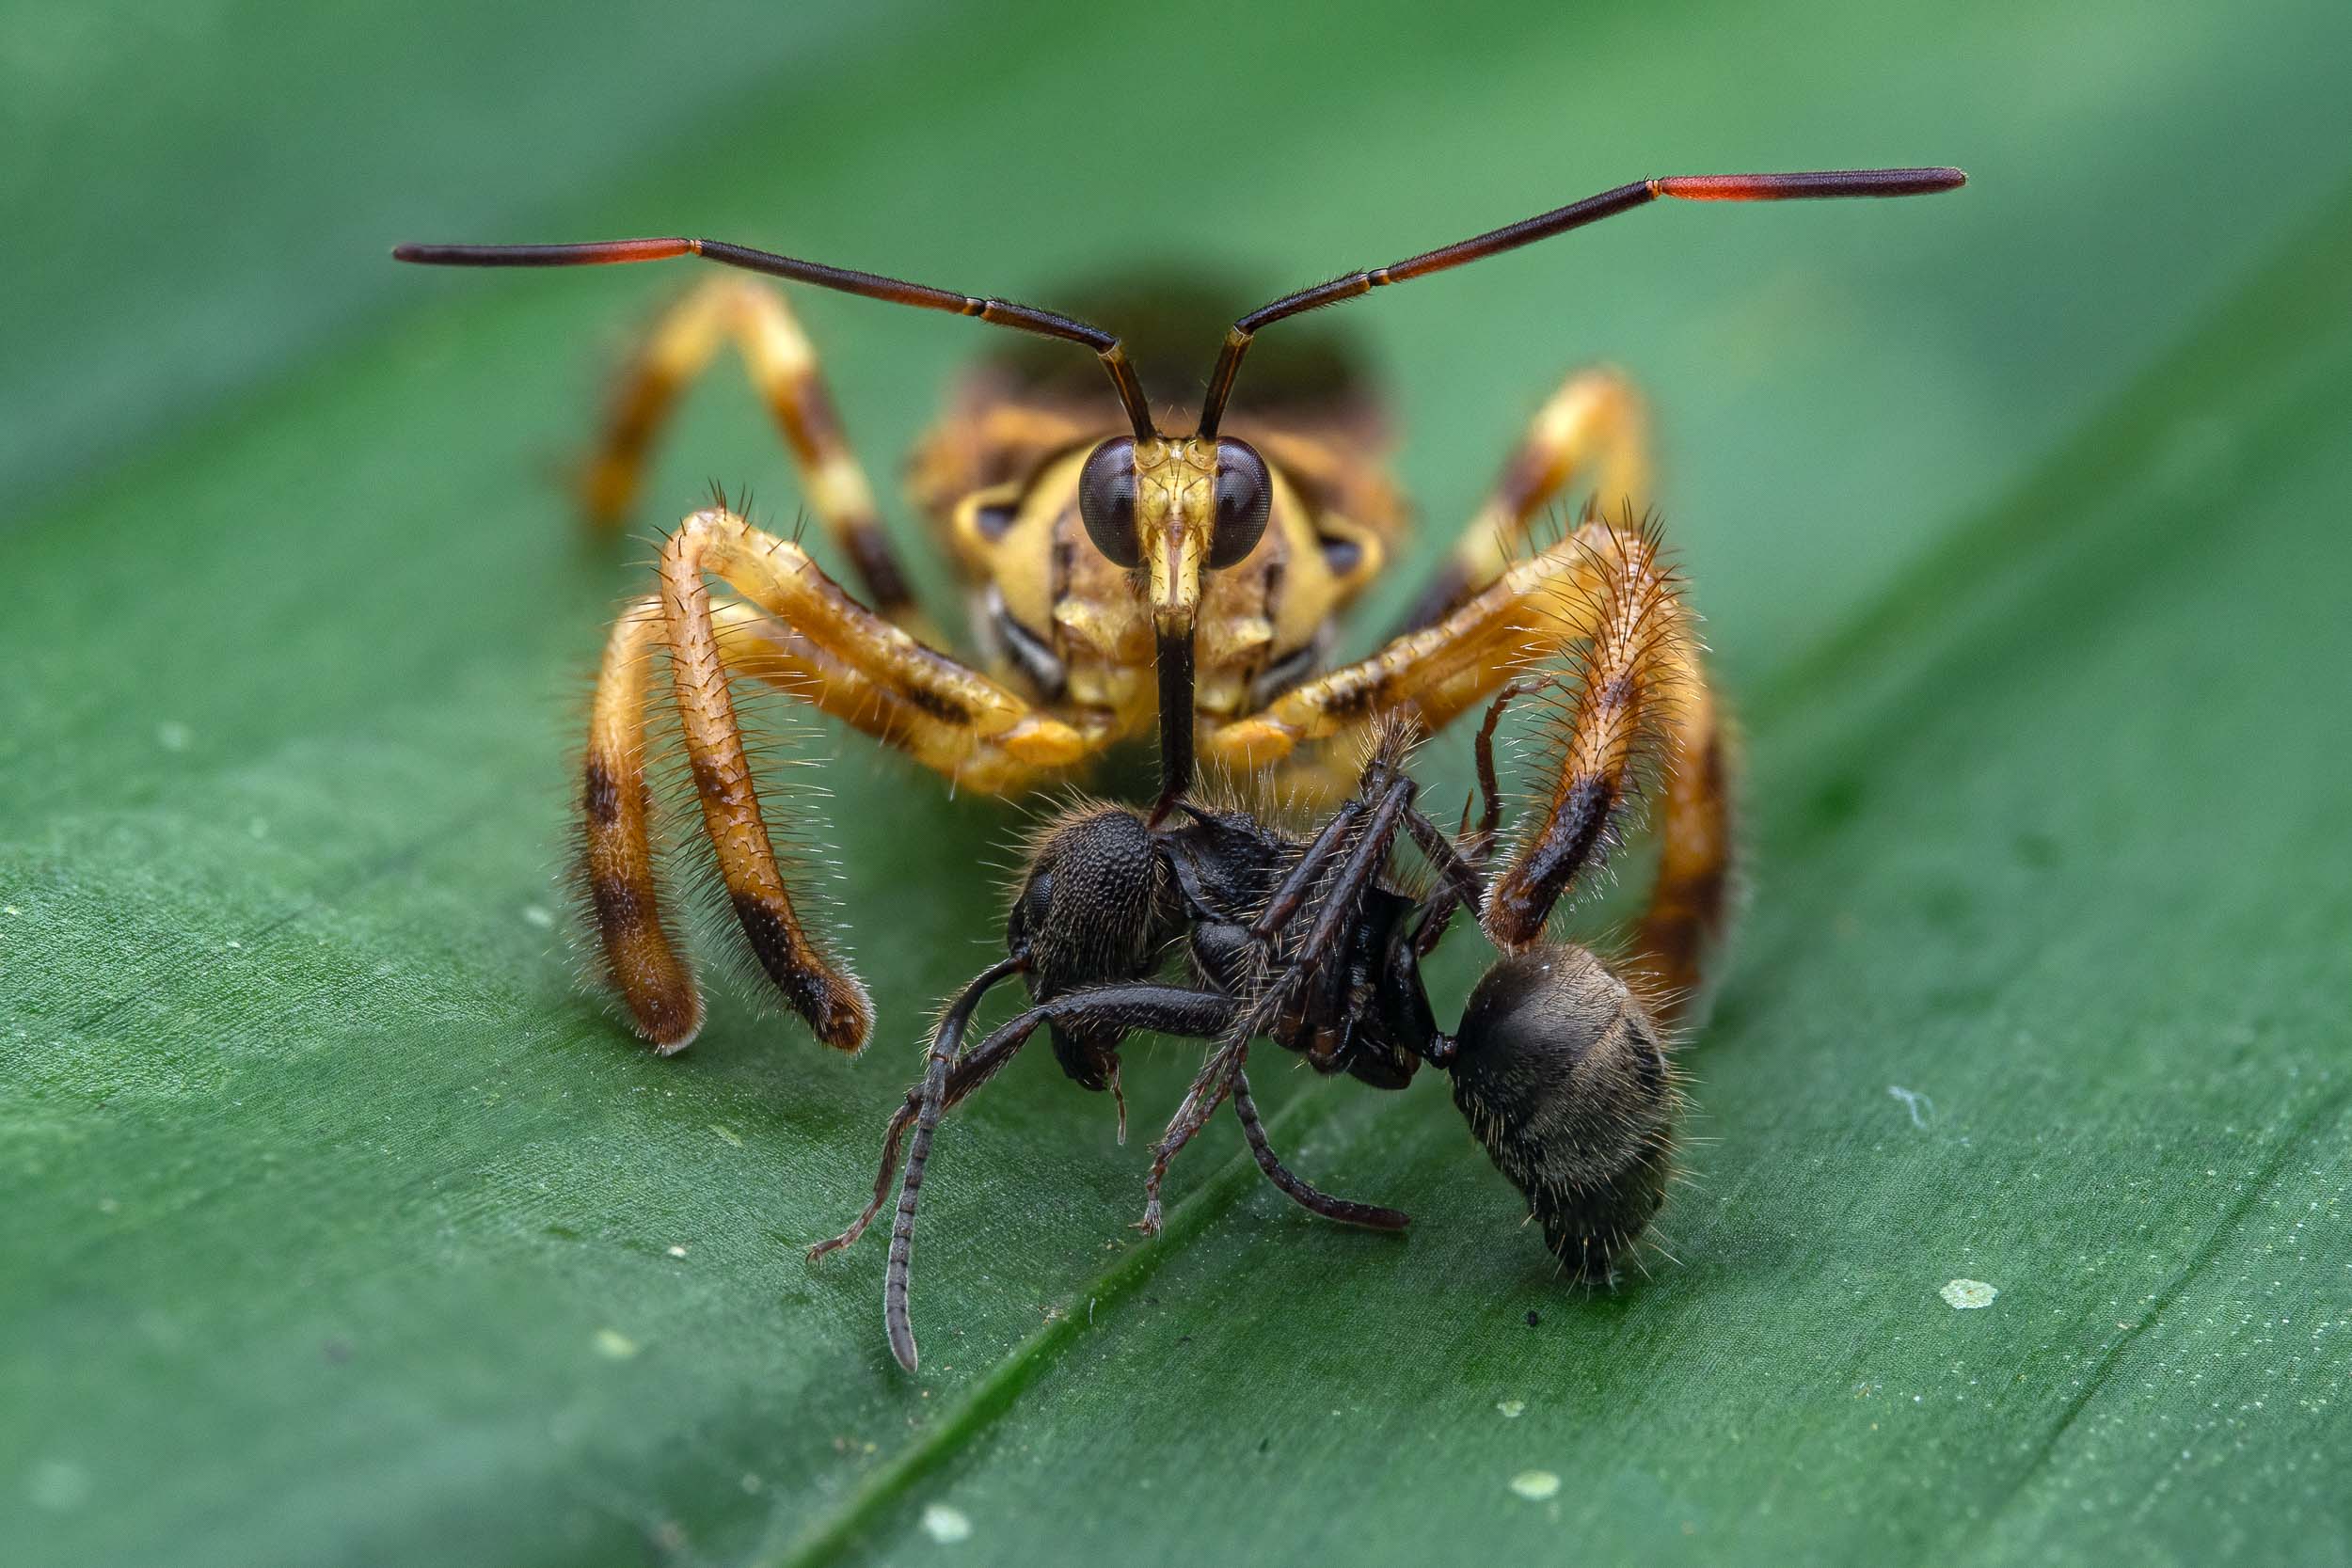 Agriocoris flavipes / Assassin bug (Costa Rica)